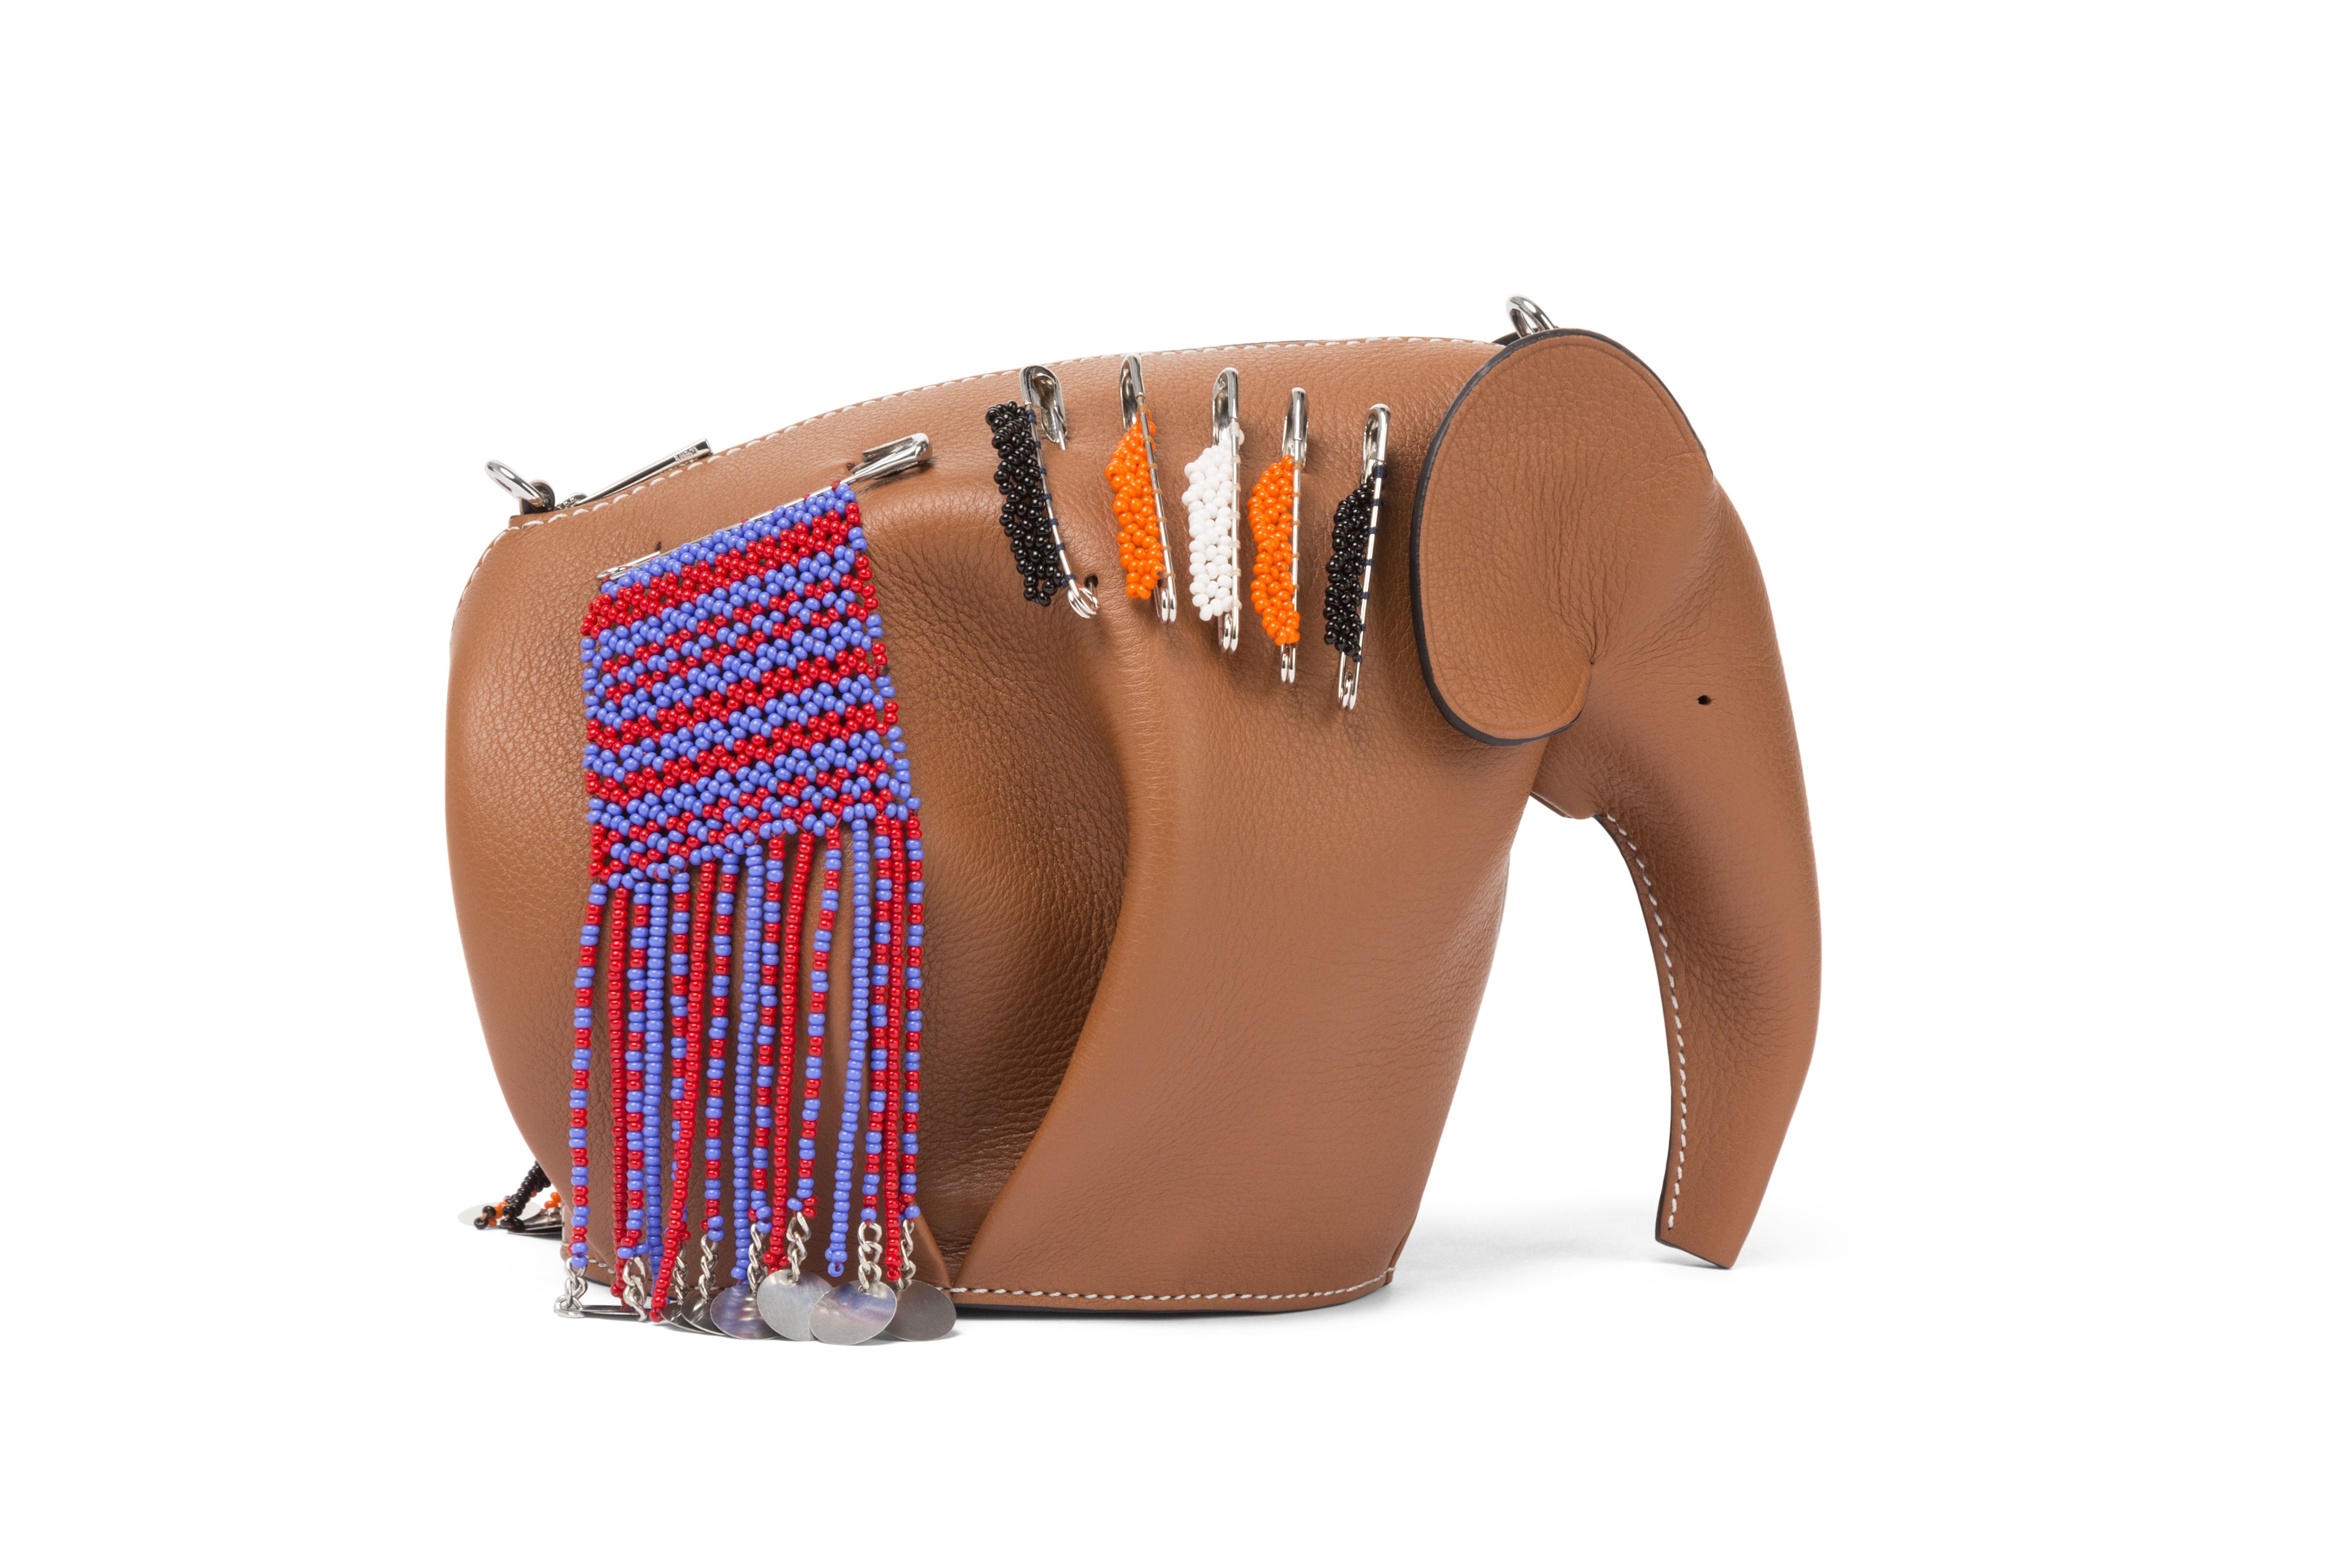 Elephant-shaped leather bag with beaded decoration.